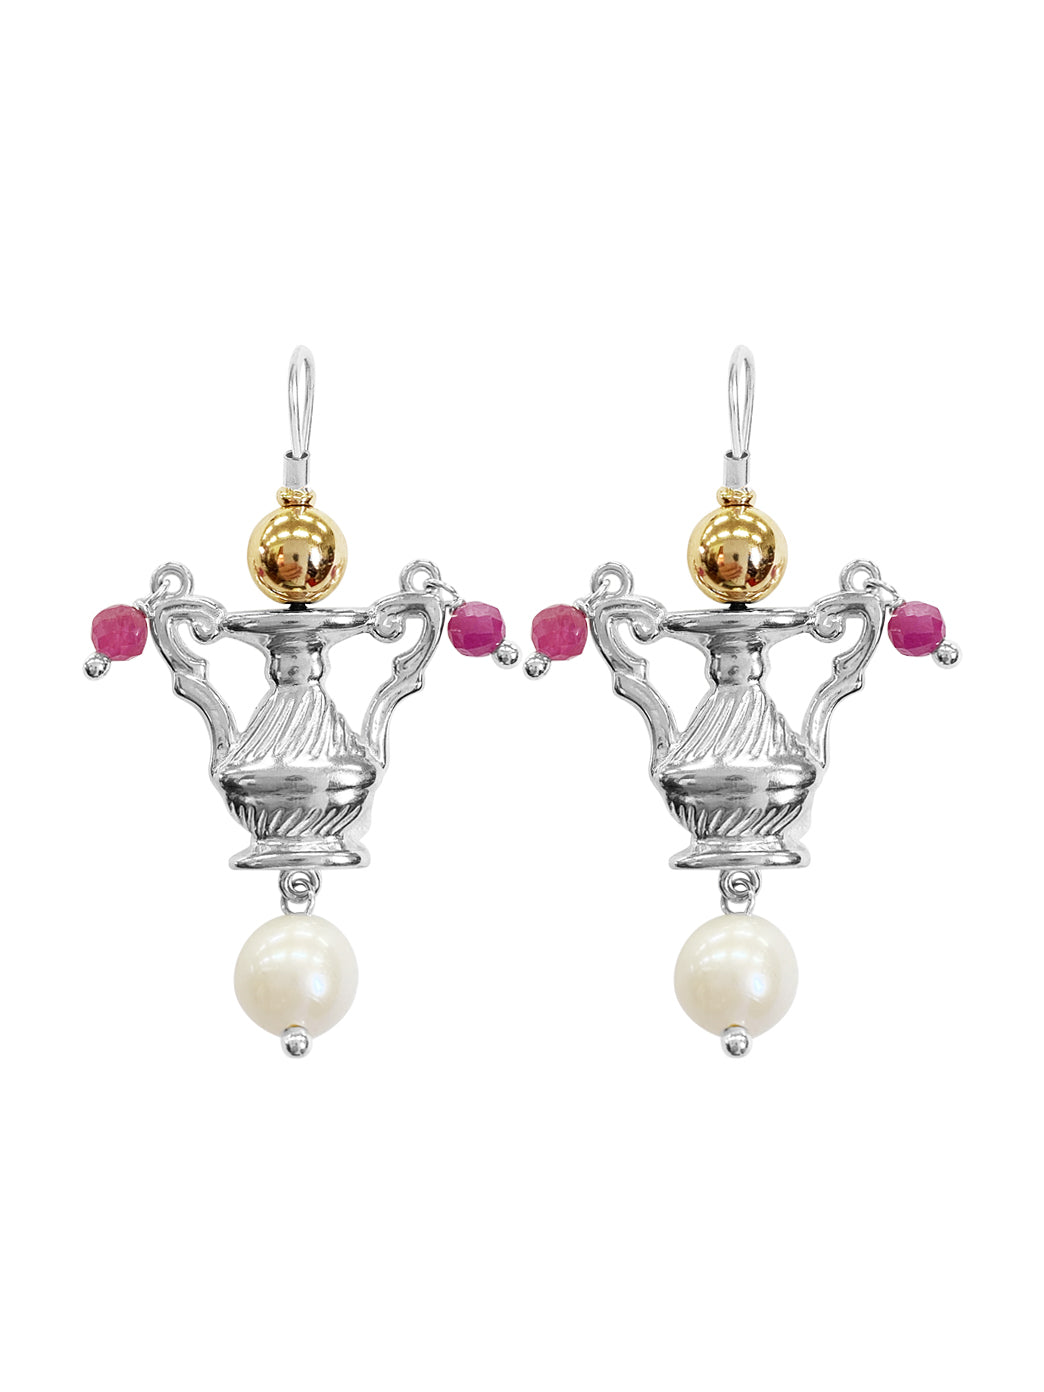 Fiorina Jewellery Como Urn Earrings Ruby and Pearl